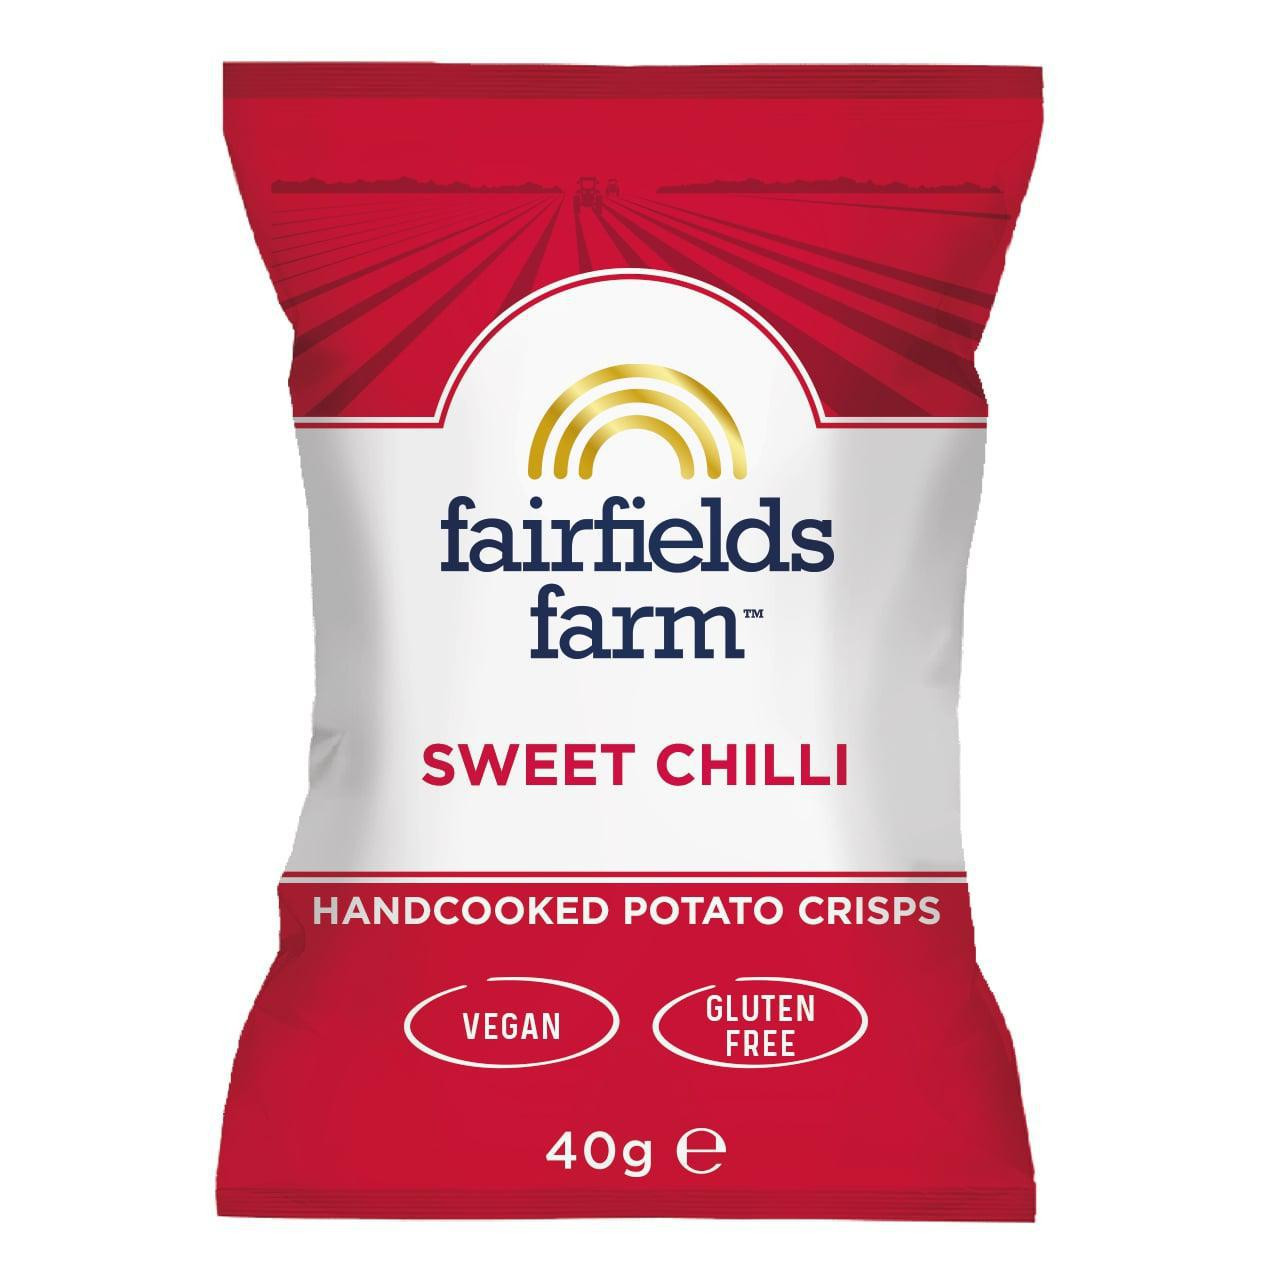 Fairfield's Farm - Sweet Chili, 40g